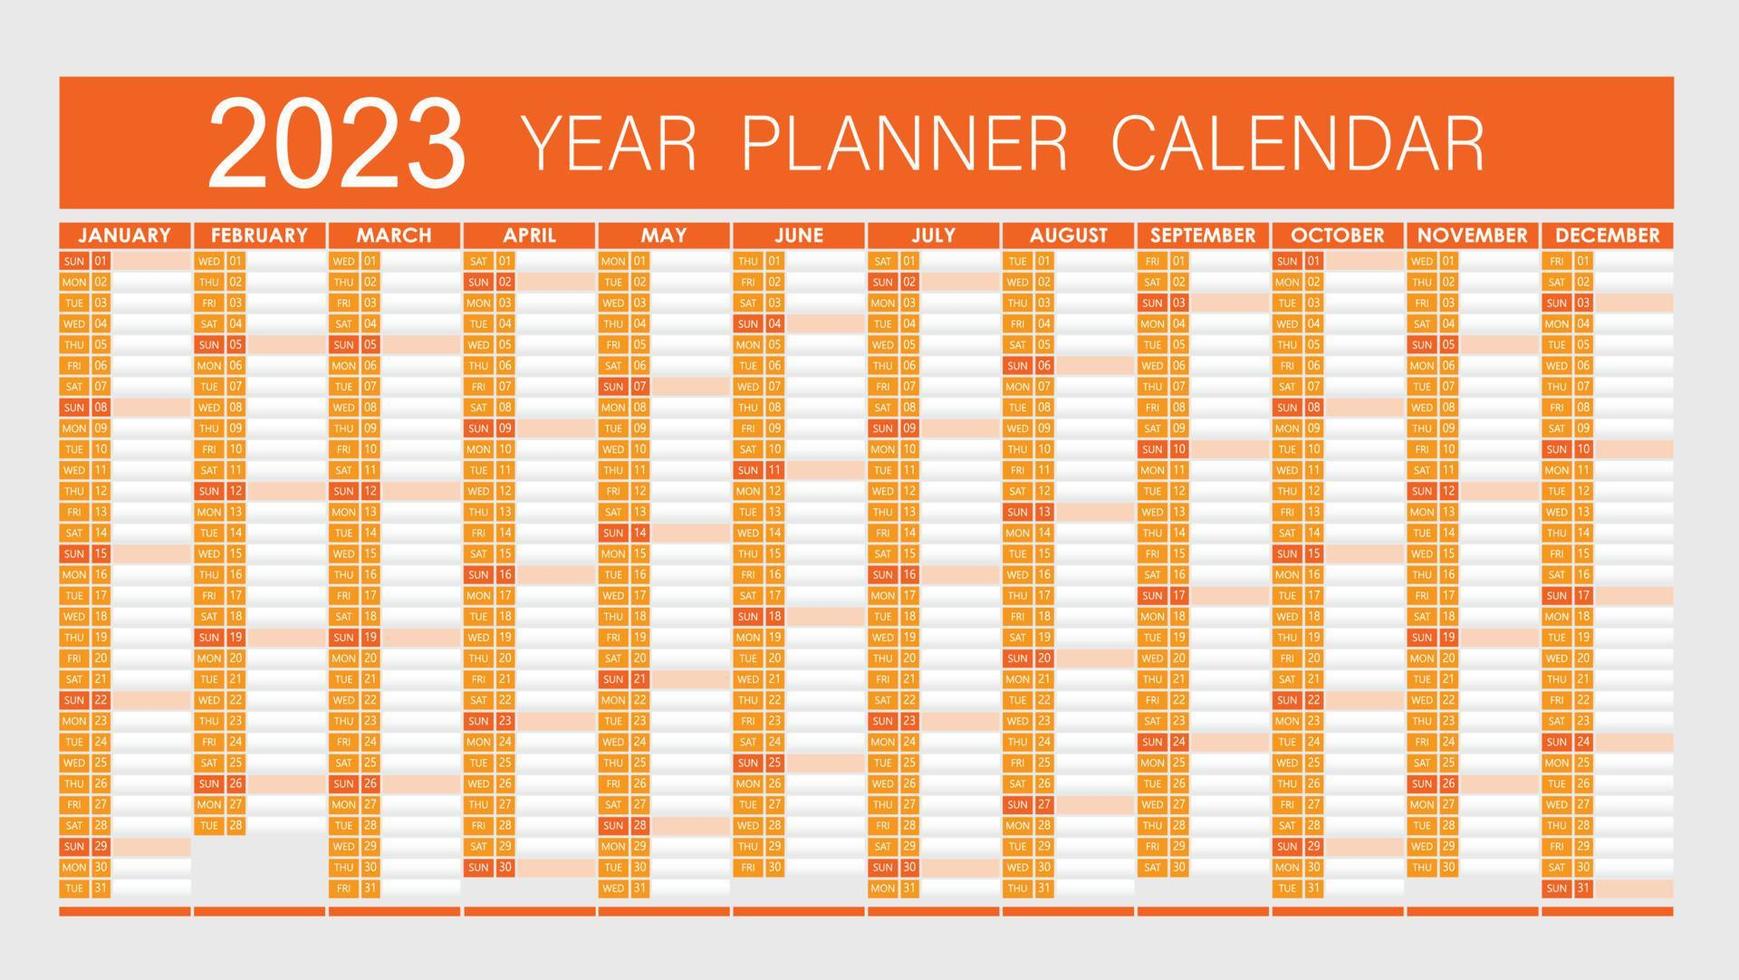 2023 Year Planner - Wall Planner Calendar Orange Color- Full Editable - Vector